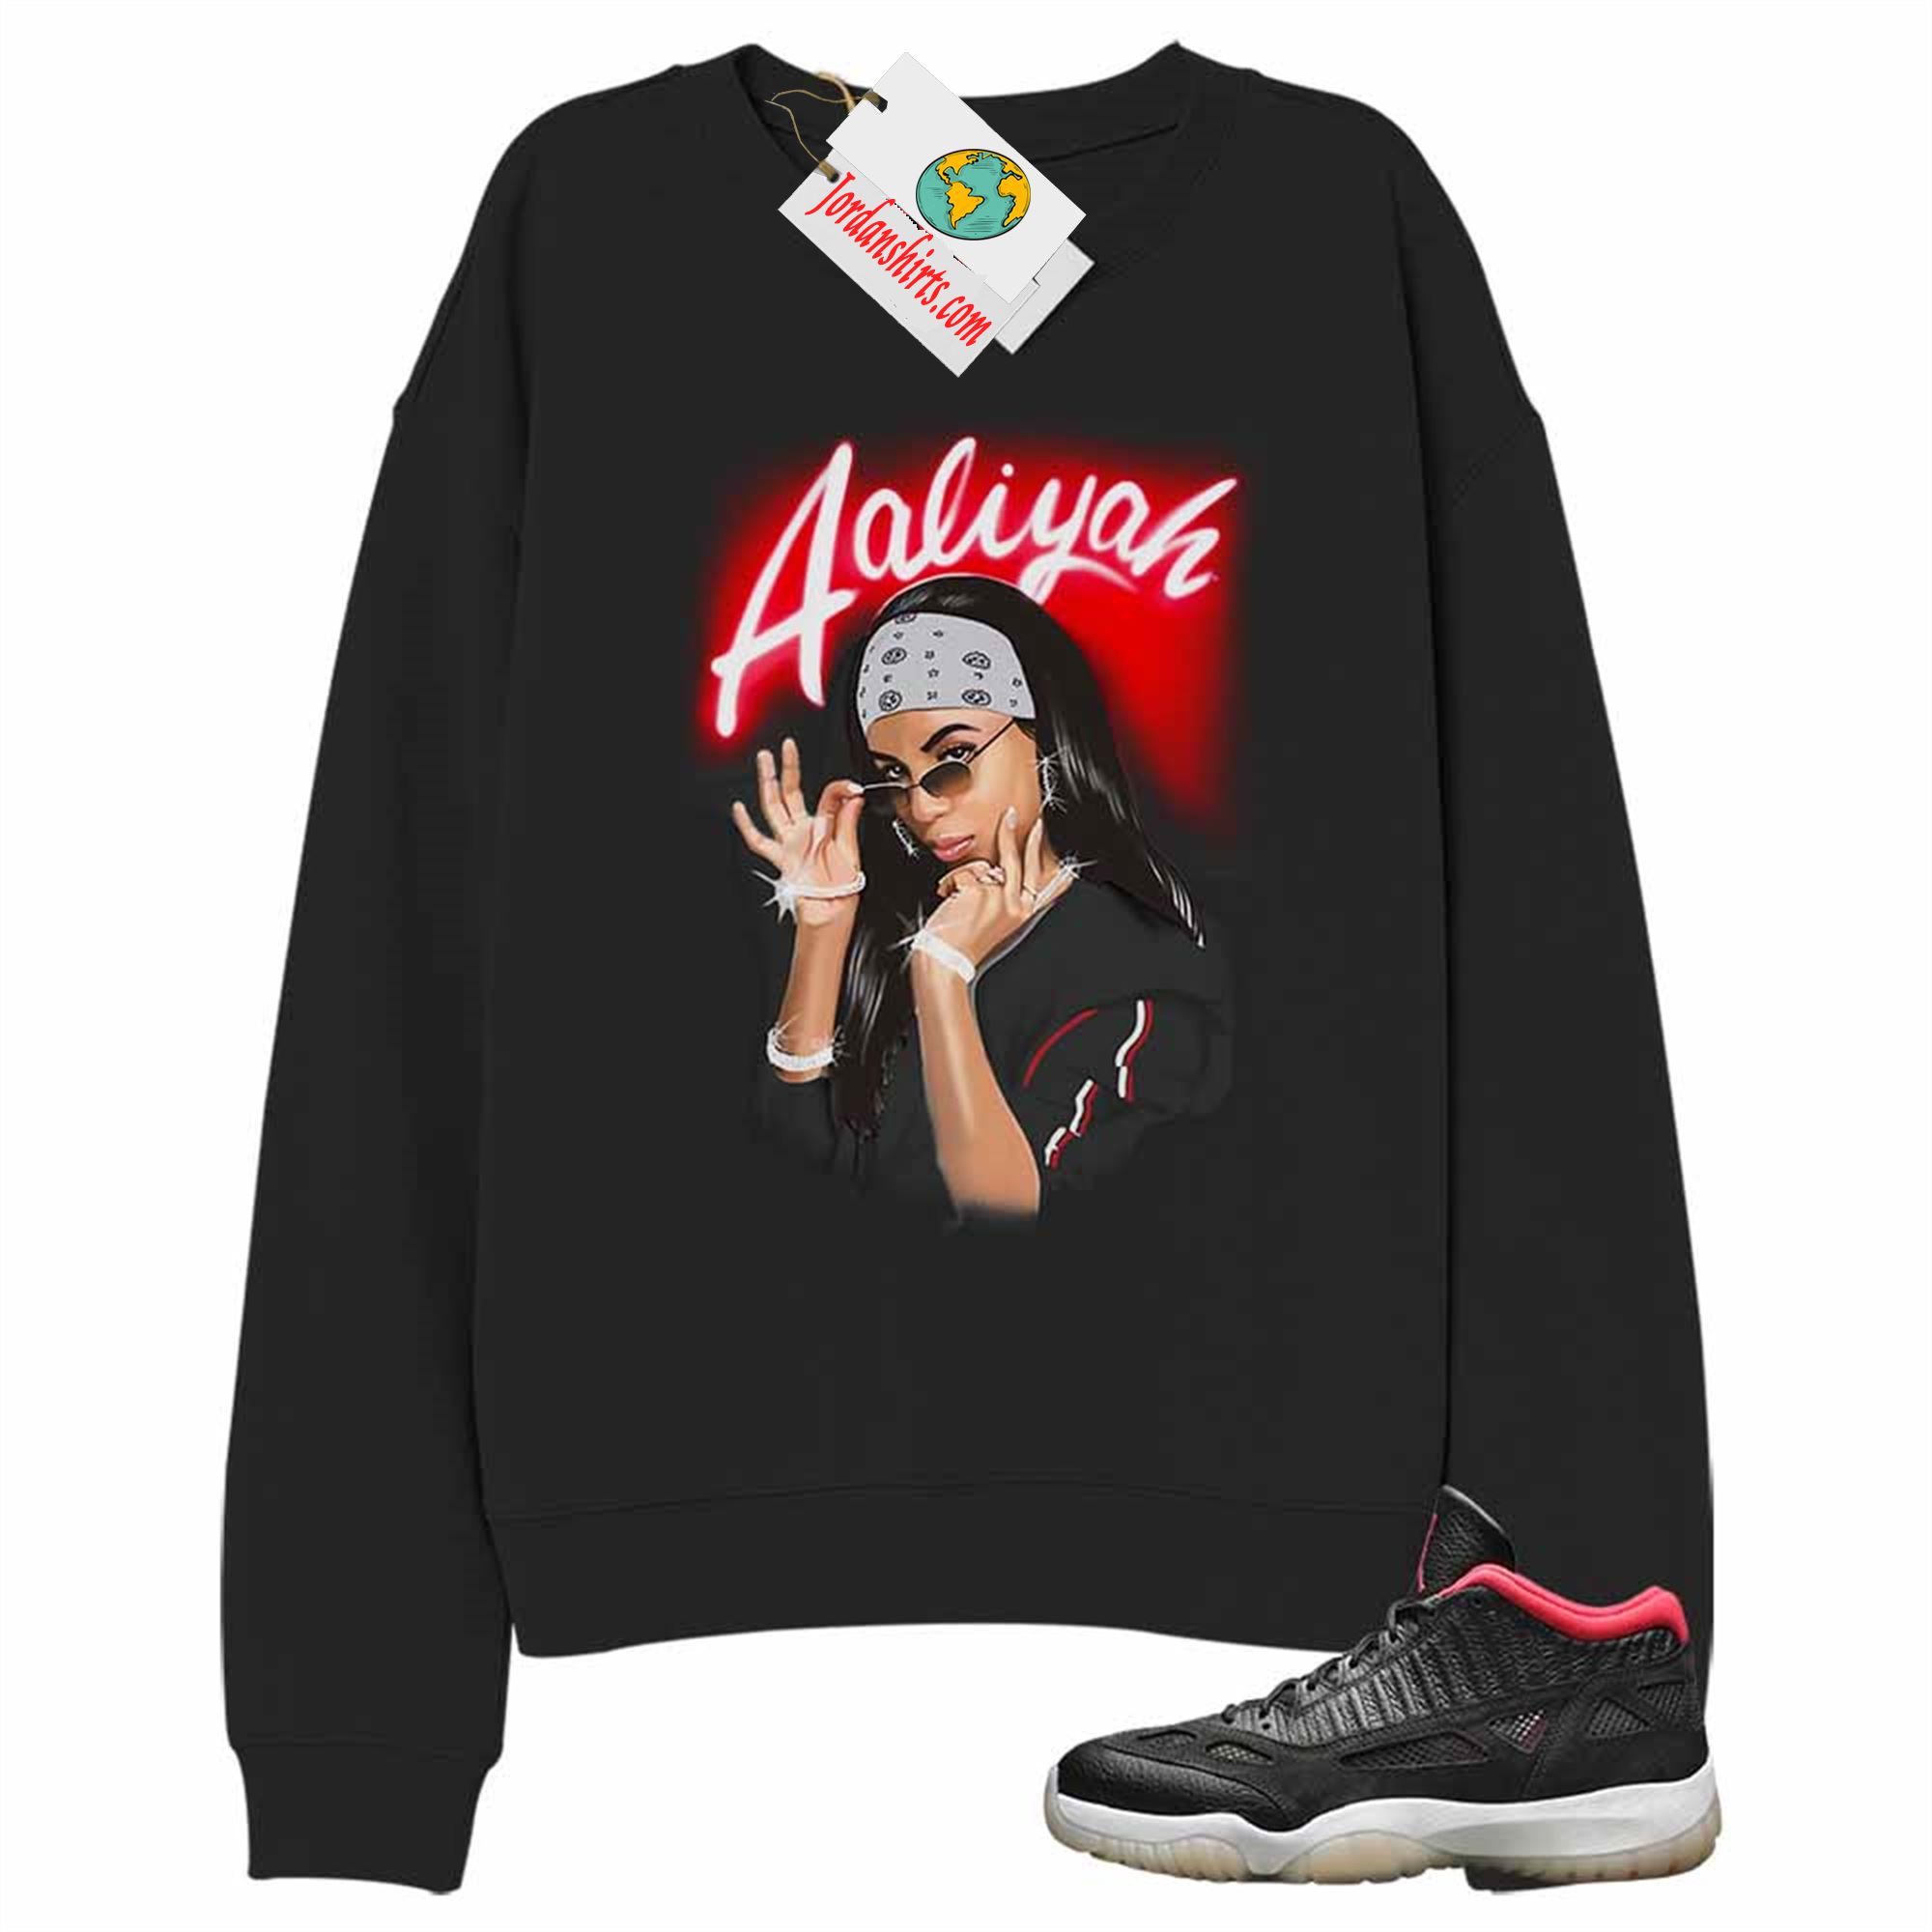 Jordan 11 Sweatshirt, Aaliyah Airbrush Black Sweatshirt Air Jordan 11 Bred 11s Full Size Up To 5xl